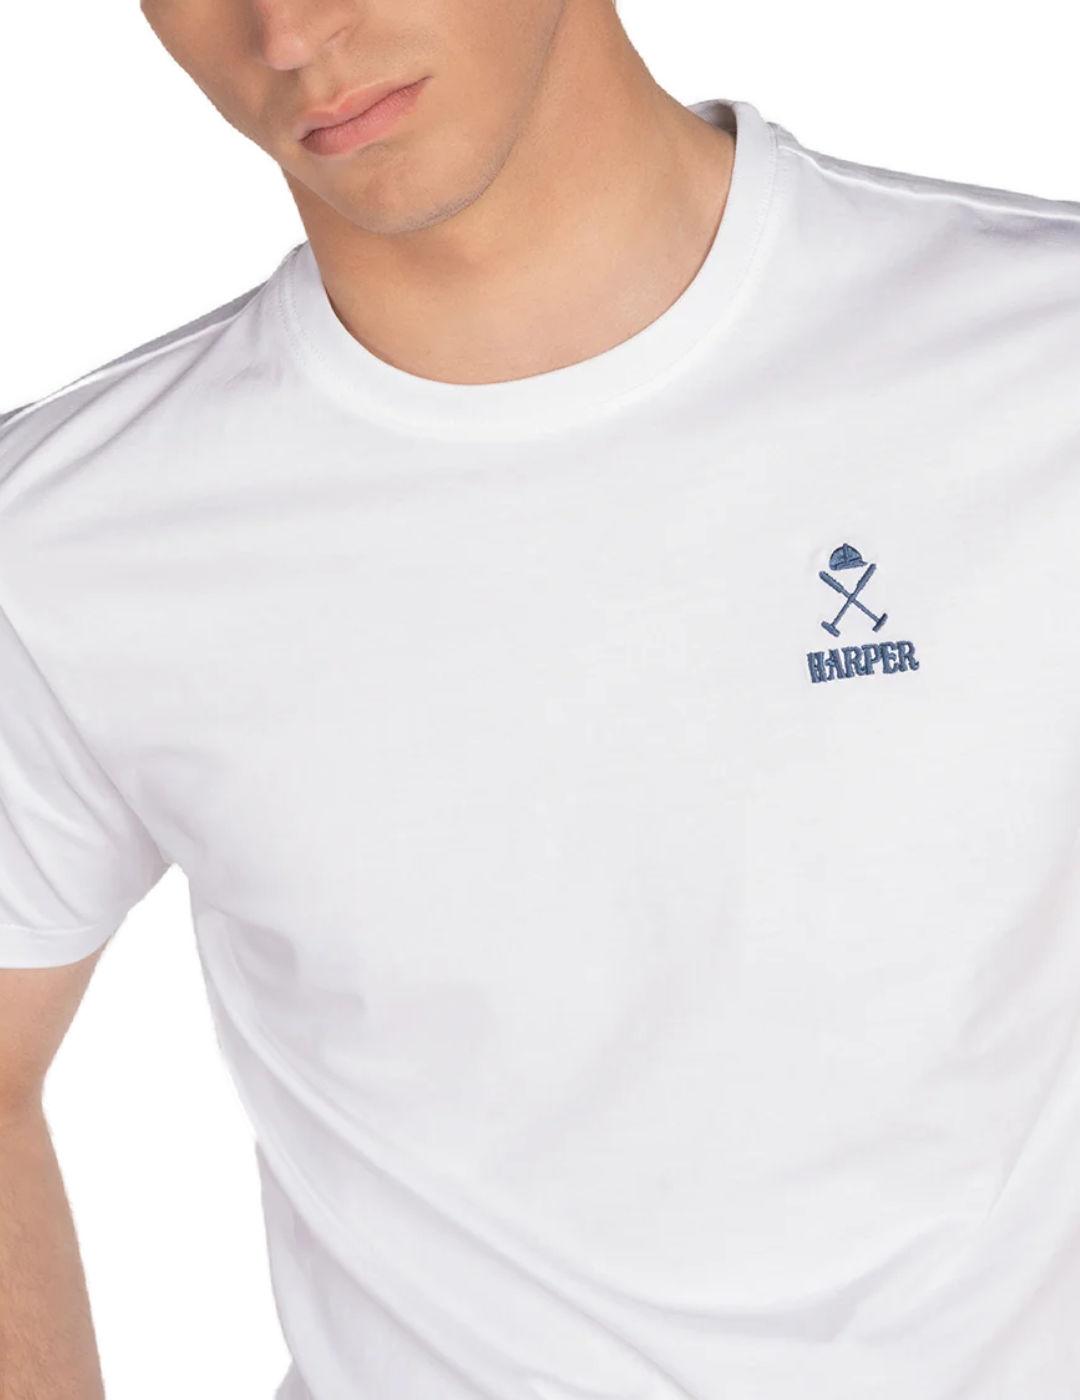 Camiseta Harper Waves blanco Regular manga corta para hombre